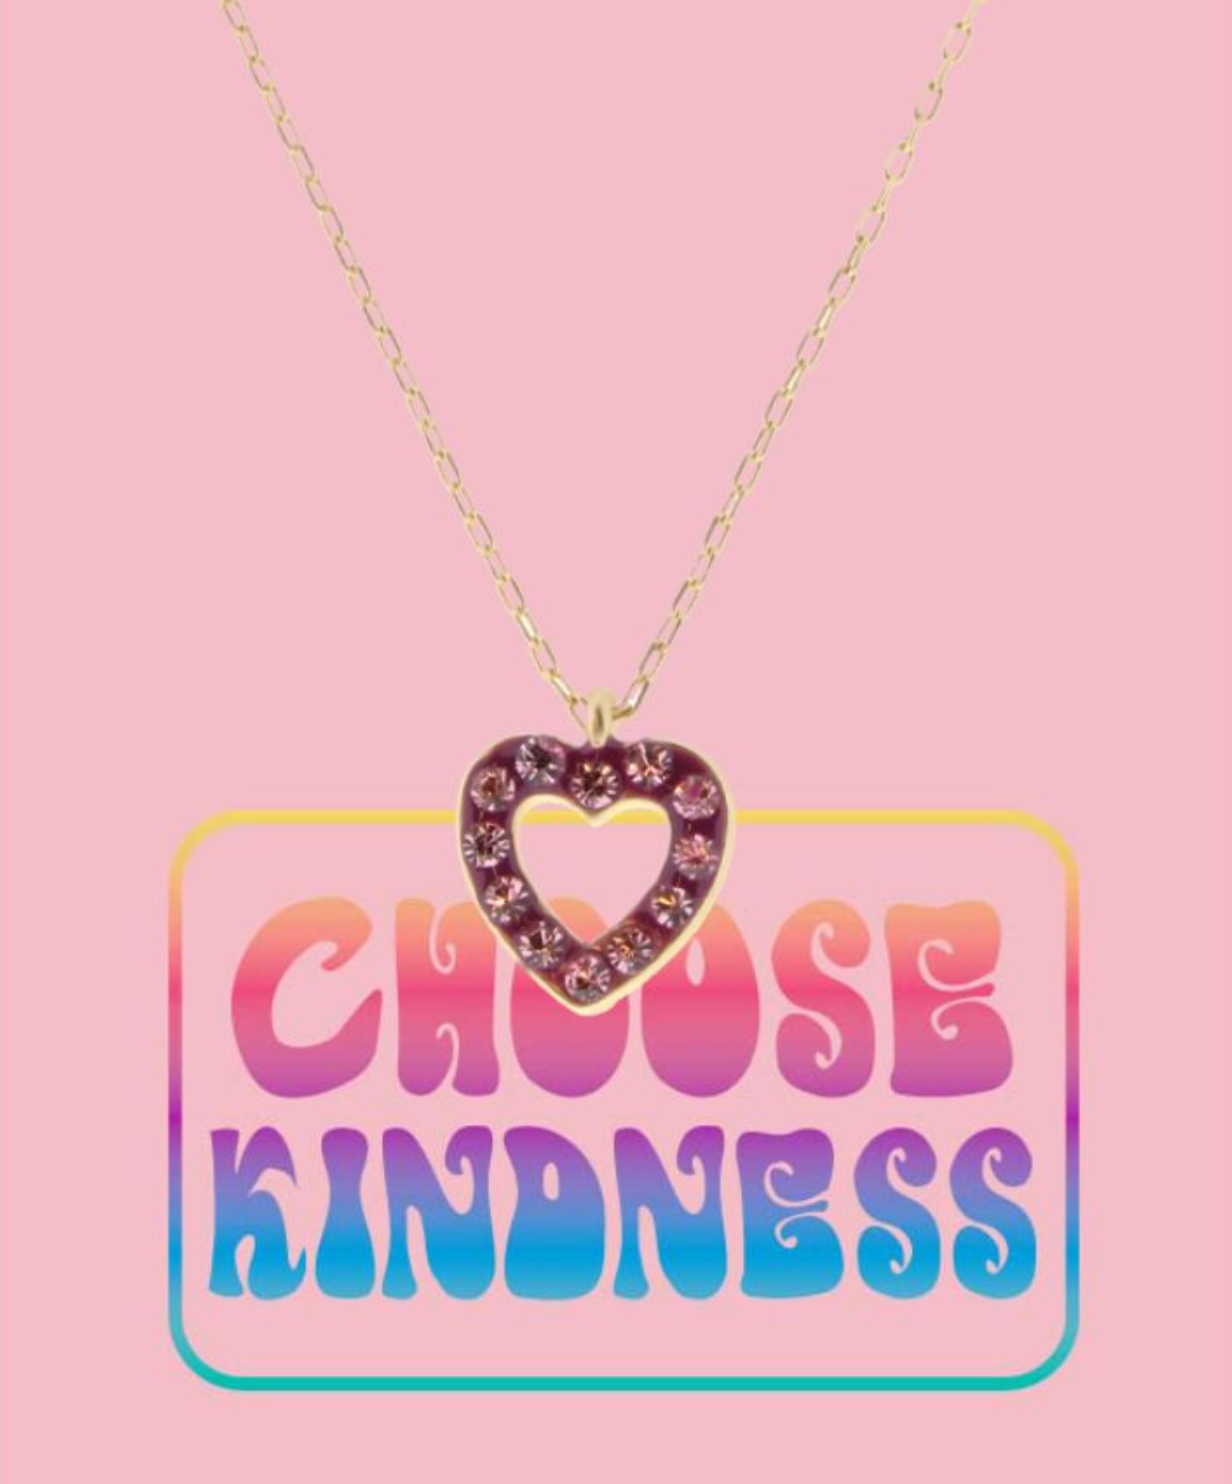 Jane Marie Choose Kindness Necklace